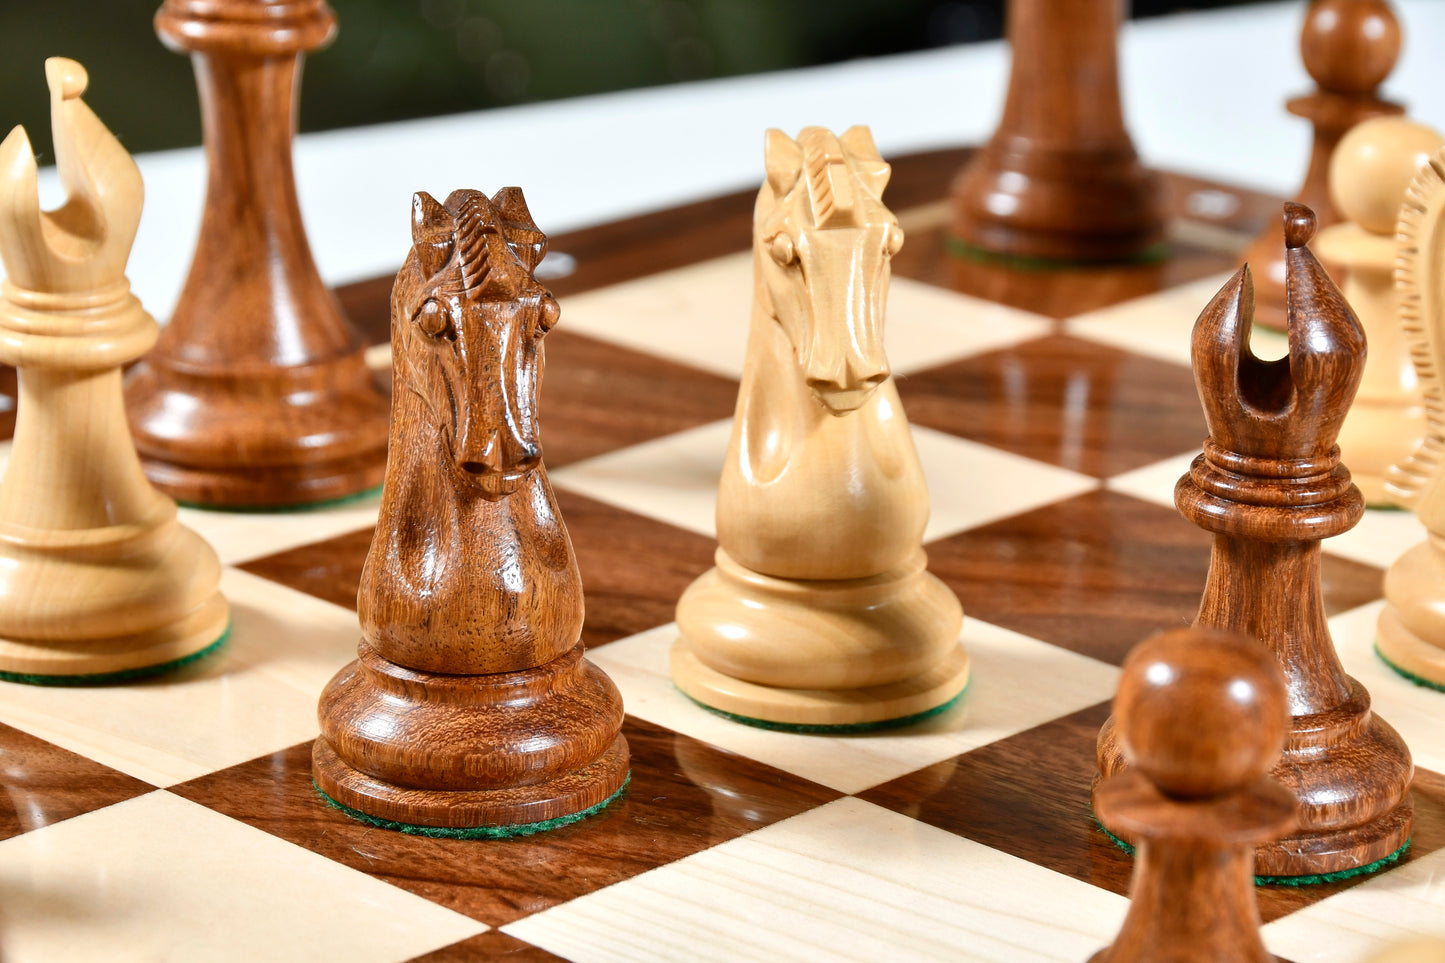 The Craftsman Knight Staunton Chess Pieces in Sheesham Wood & Boxwood - 3.9" King